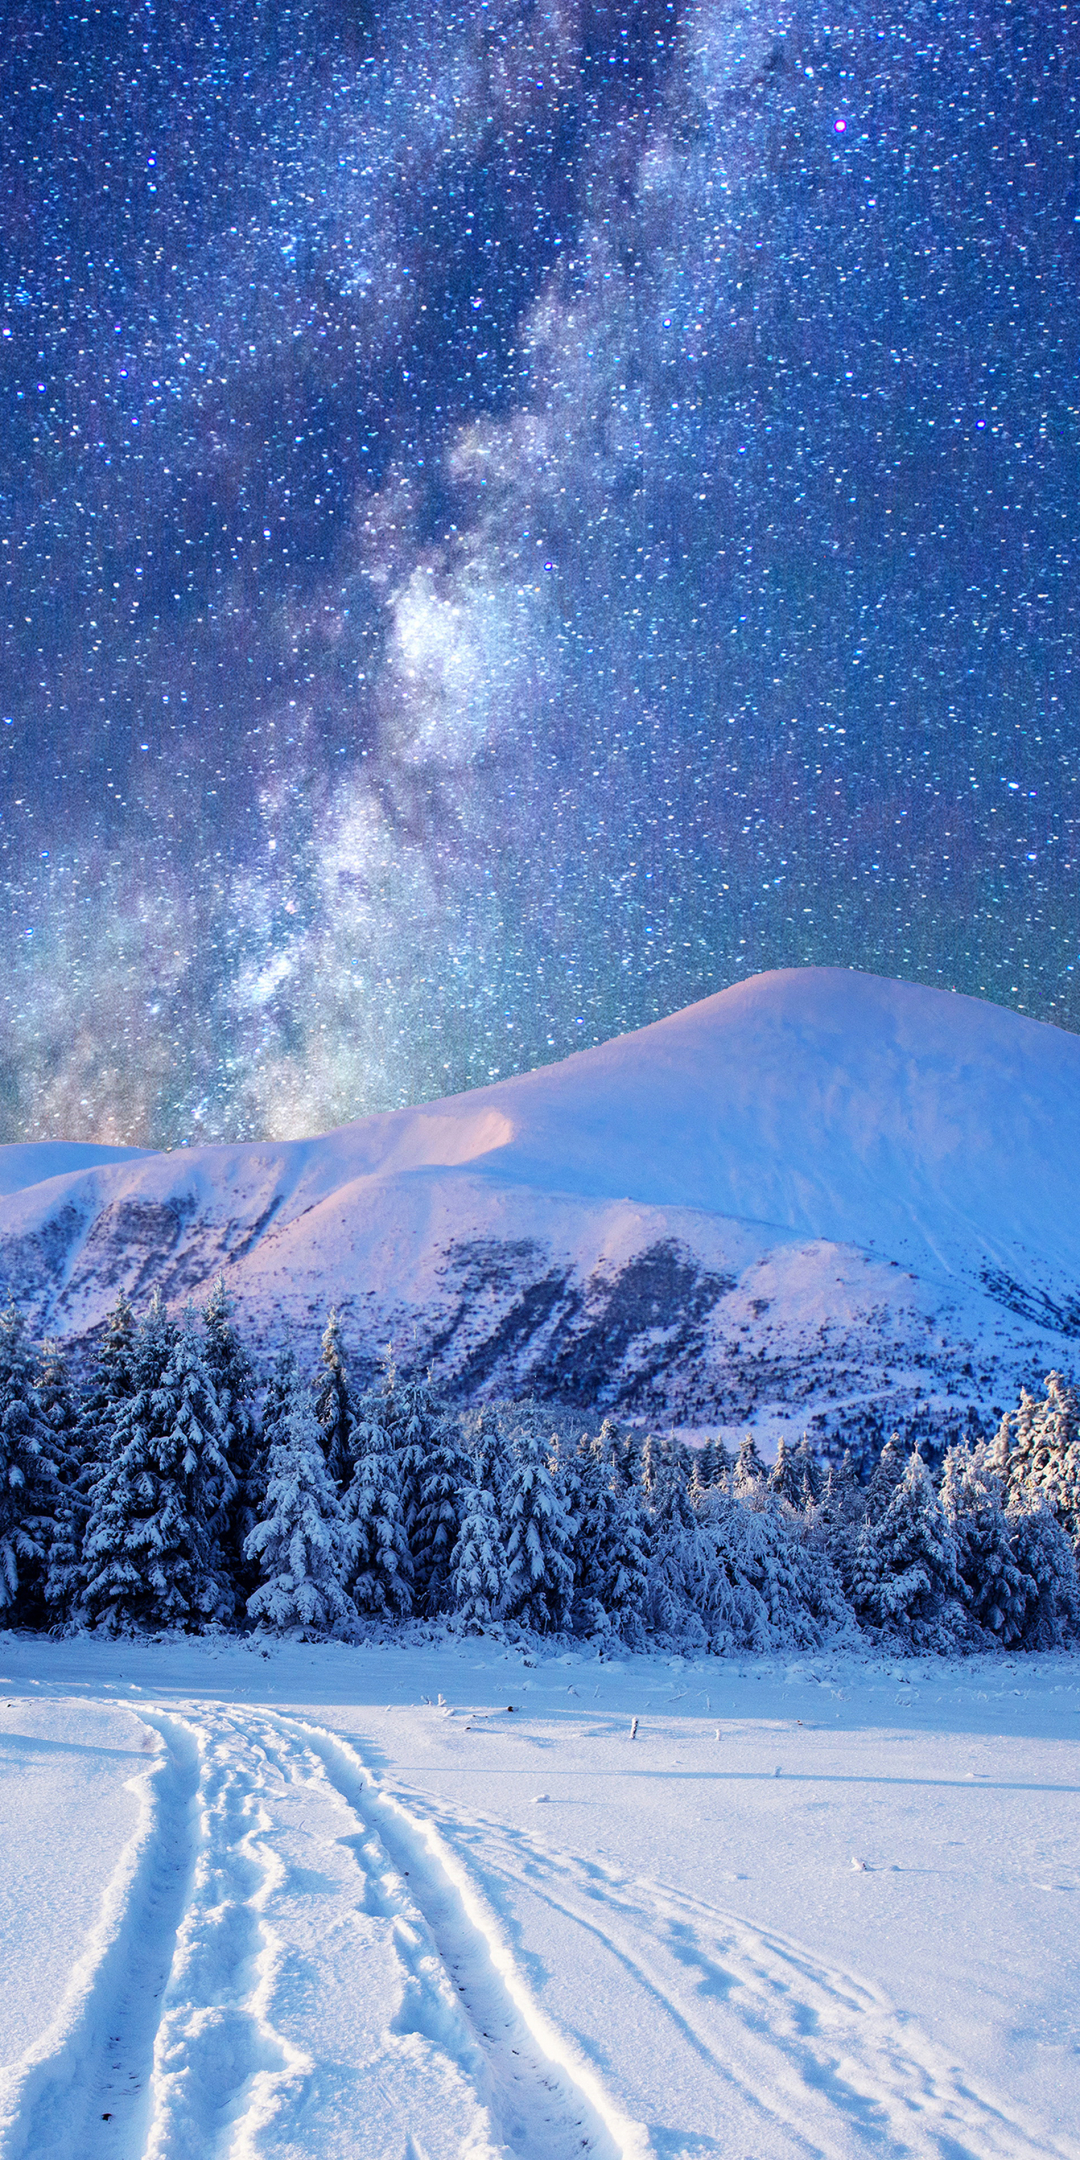 Starry Sky over Winter Landscape